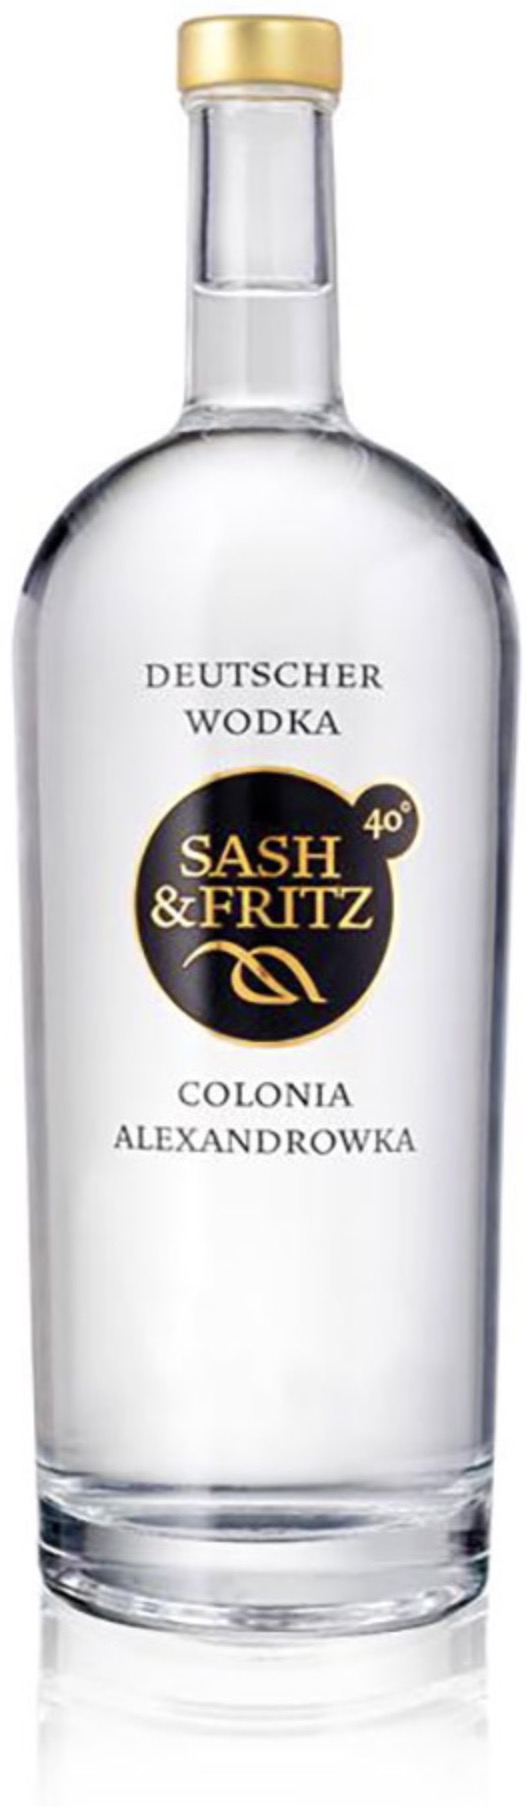 Sash & Fritz Wodka 40% vol. 0,7L